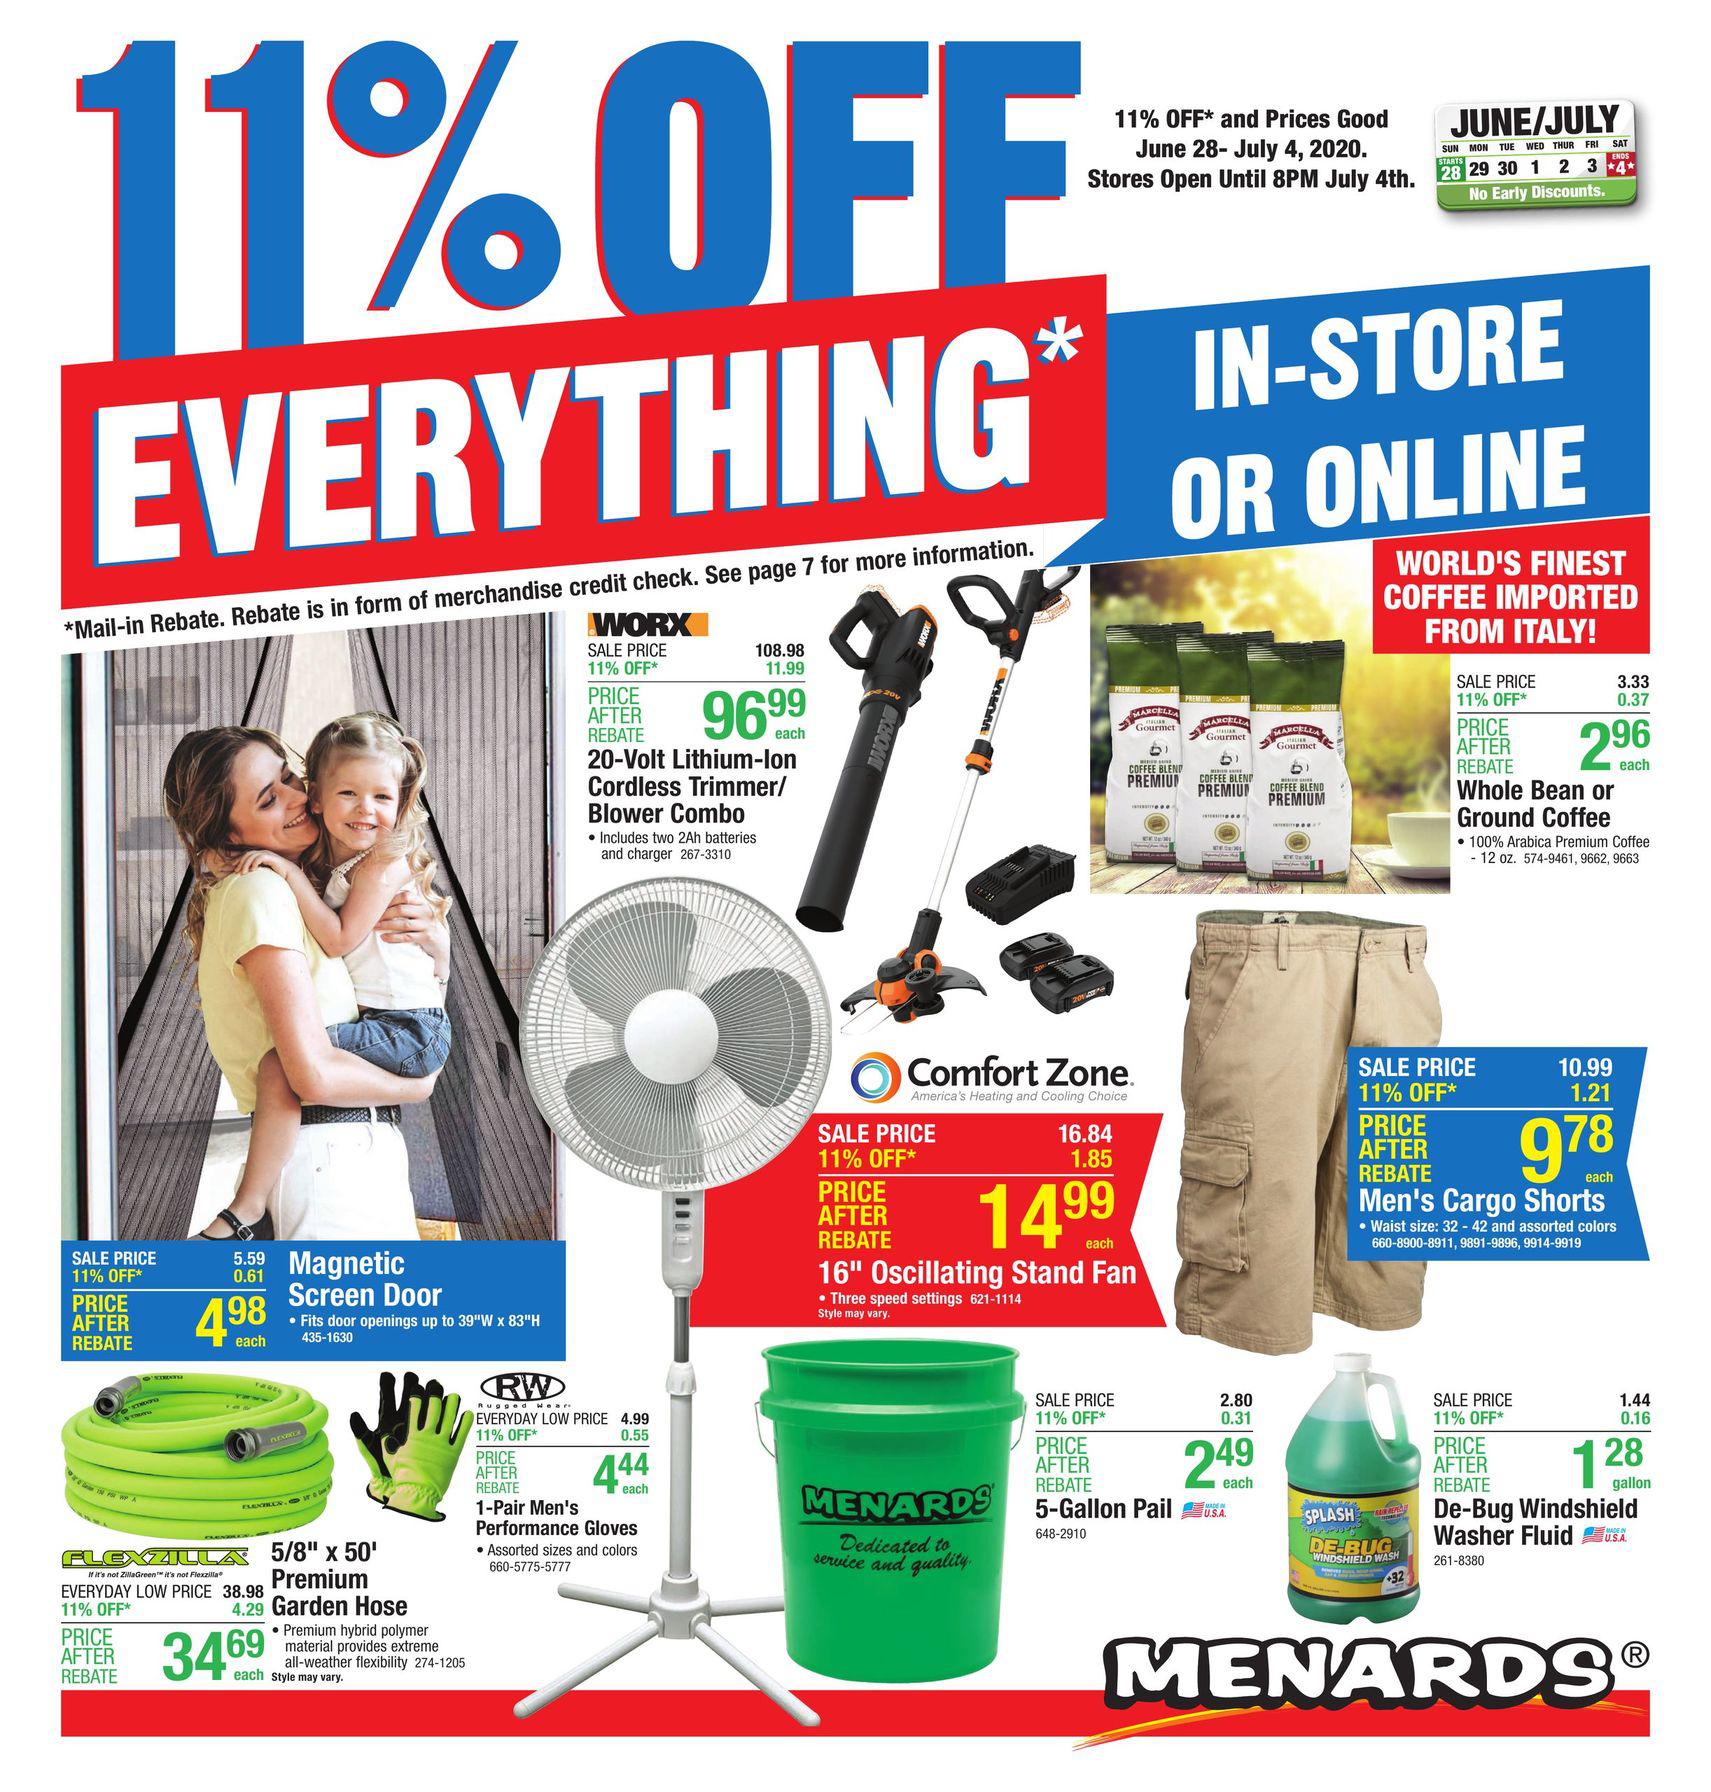 Menards Weekly Ad June 28 - July 4, 2020. July 4t Sale!